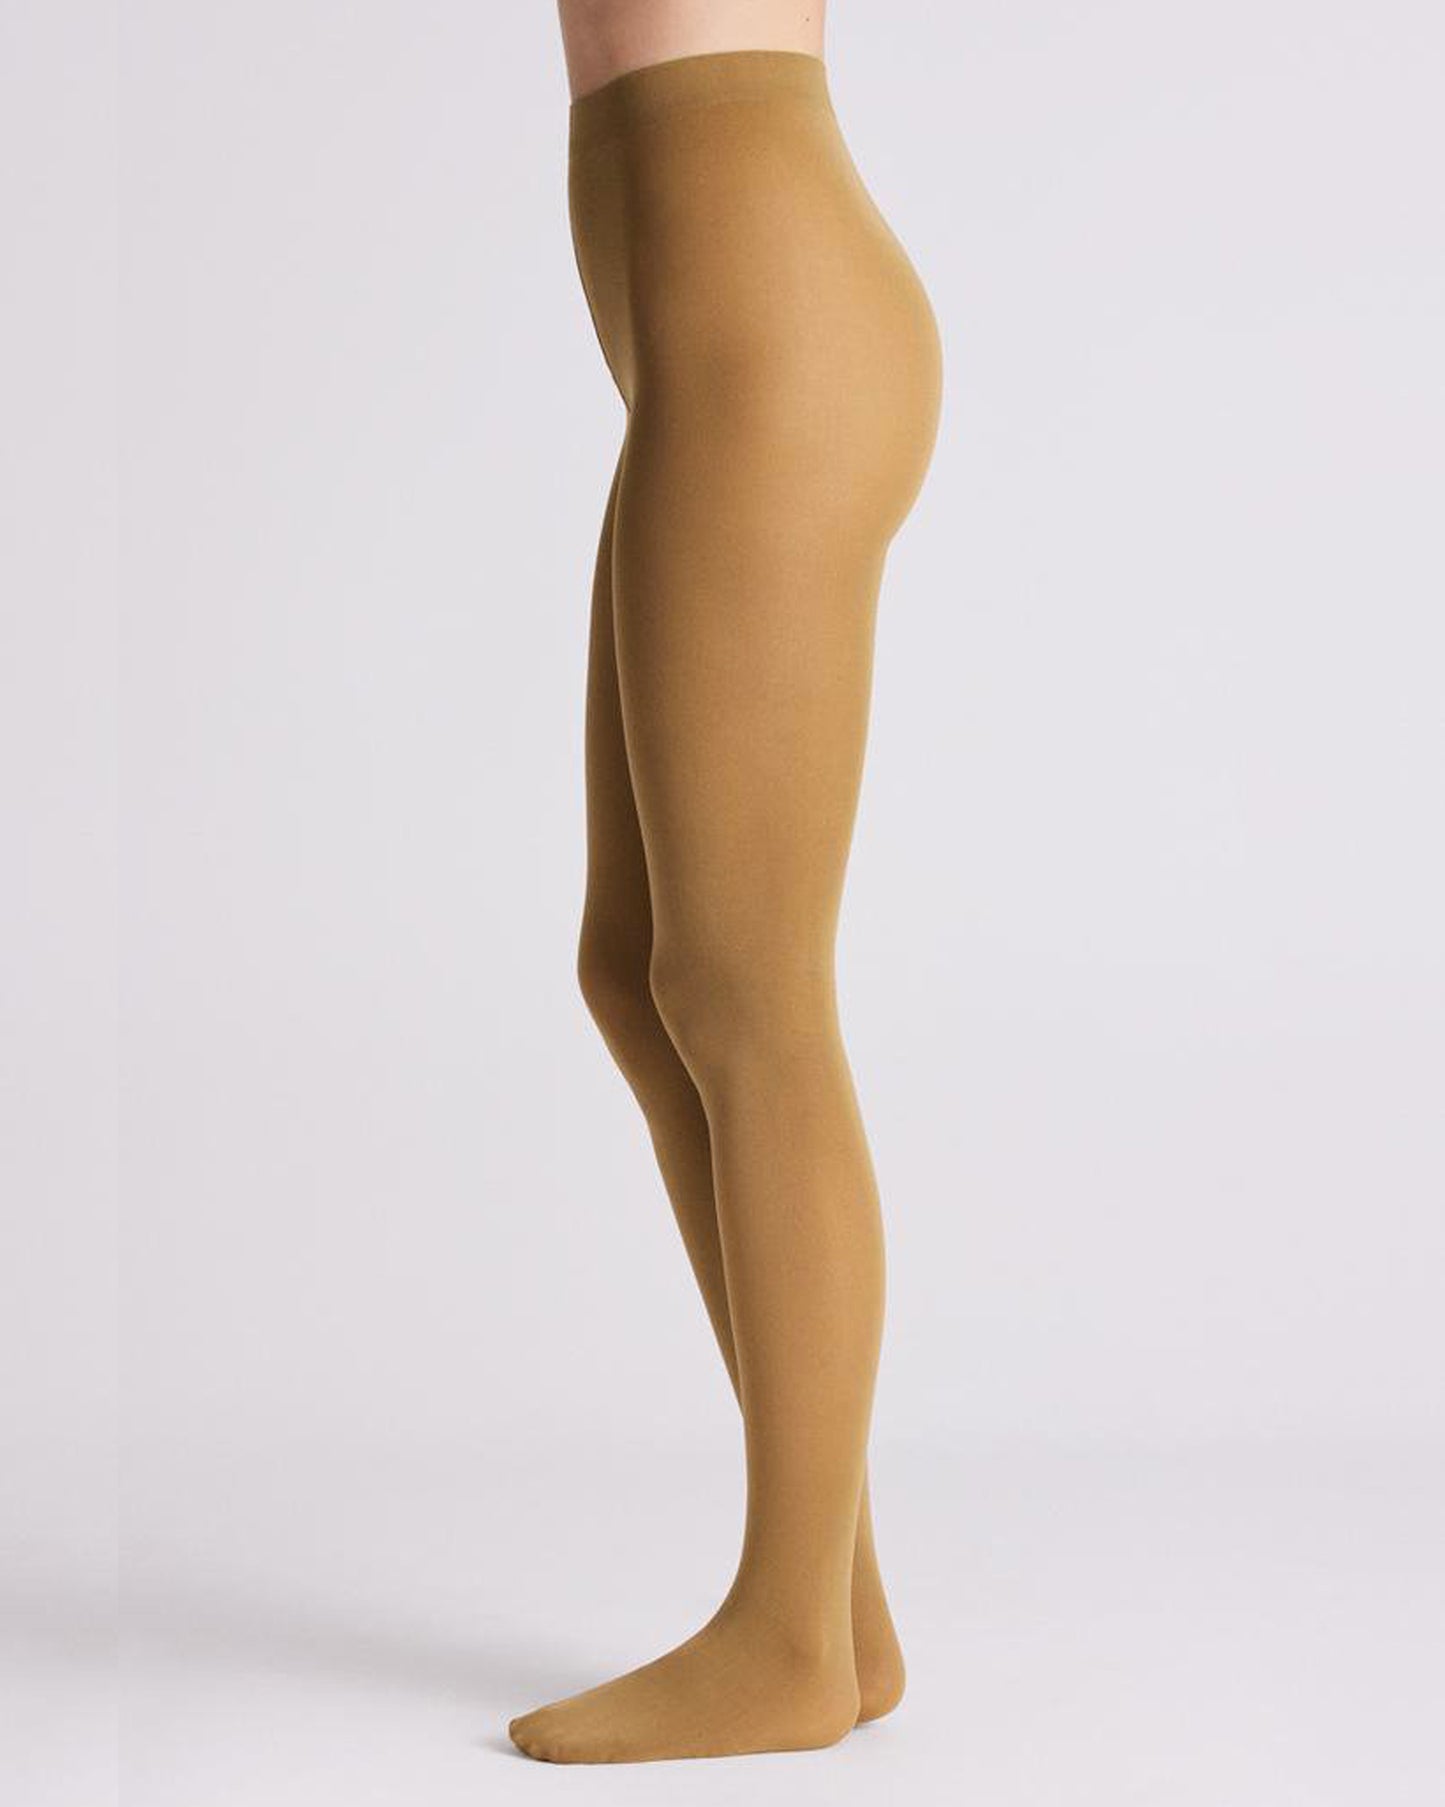 Ysabel Mora 16838 Activa 70 Den Tights - Ysabel Mora Activa 70 Panty - plain matte opaque tights in a camel beige colour.